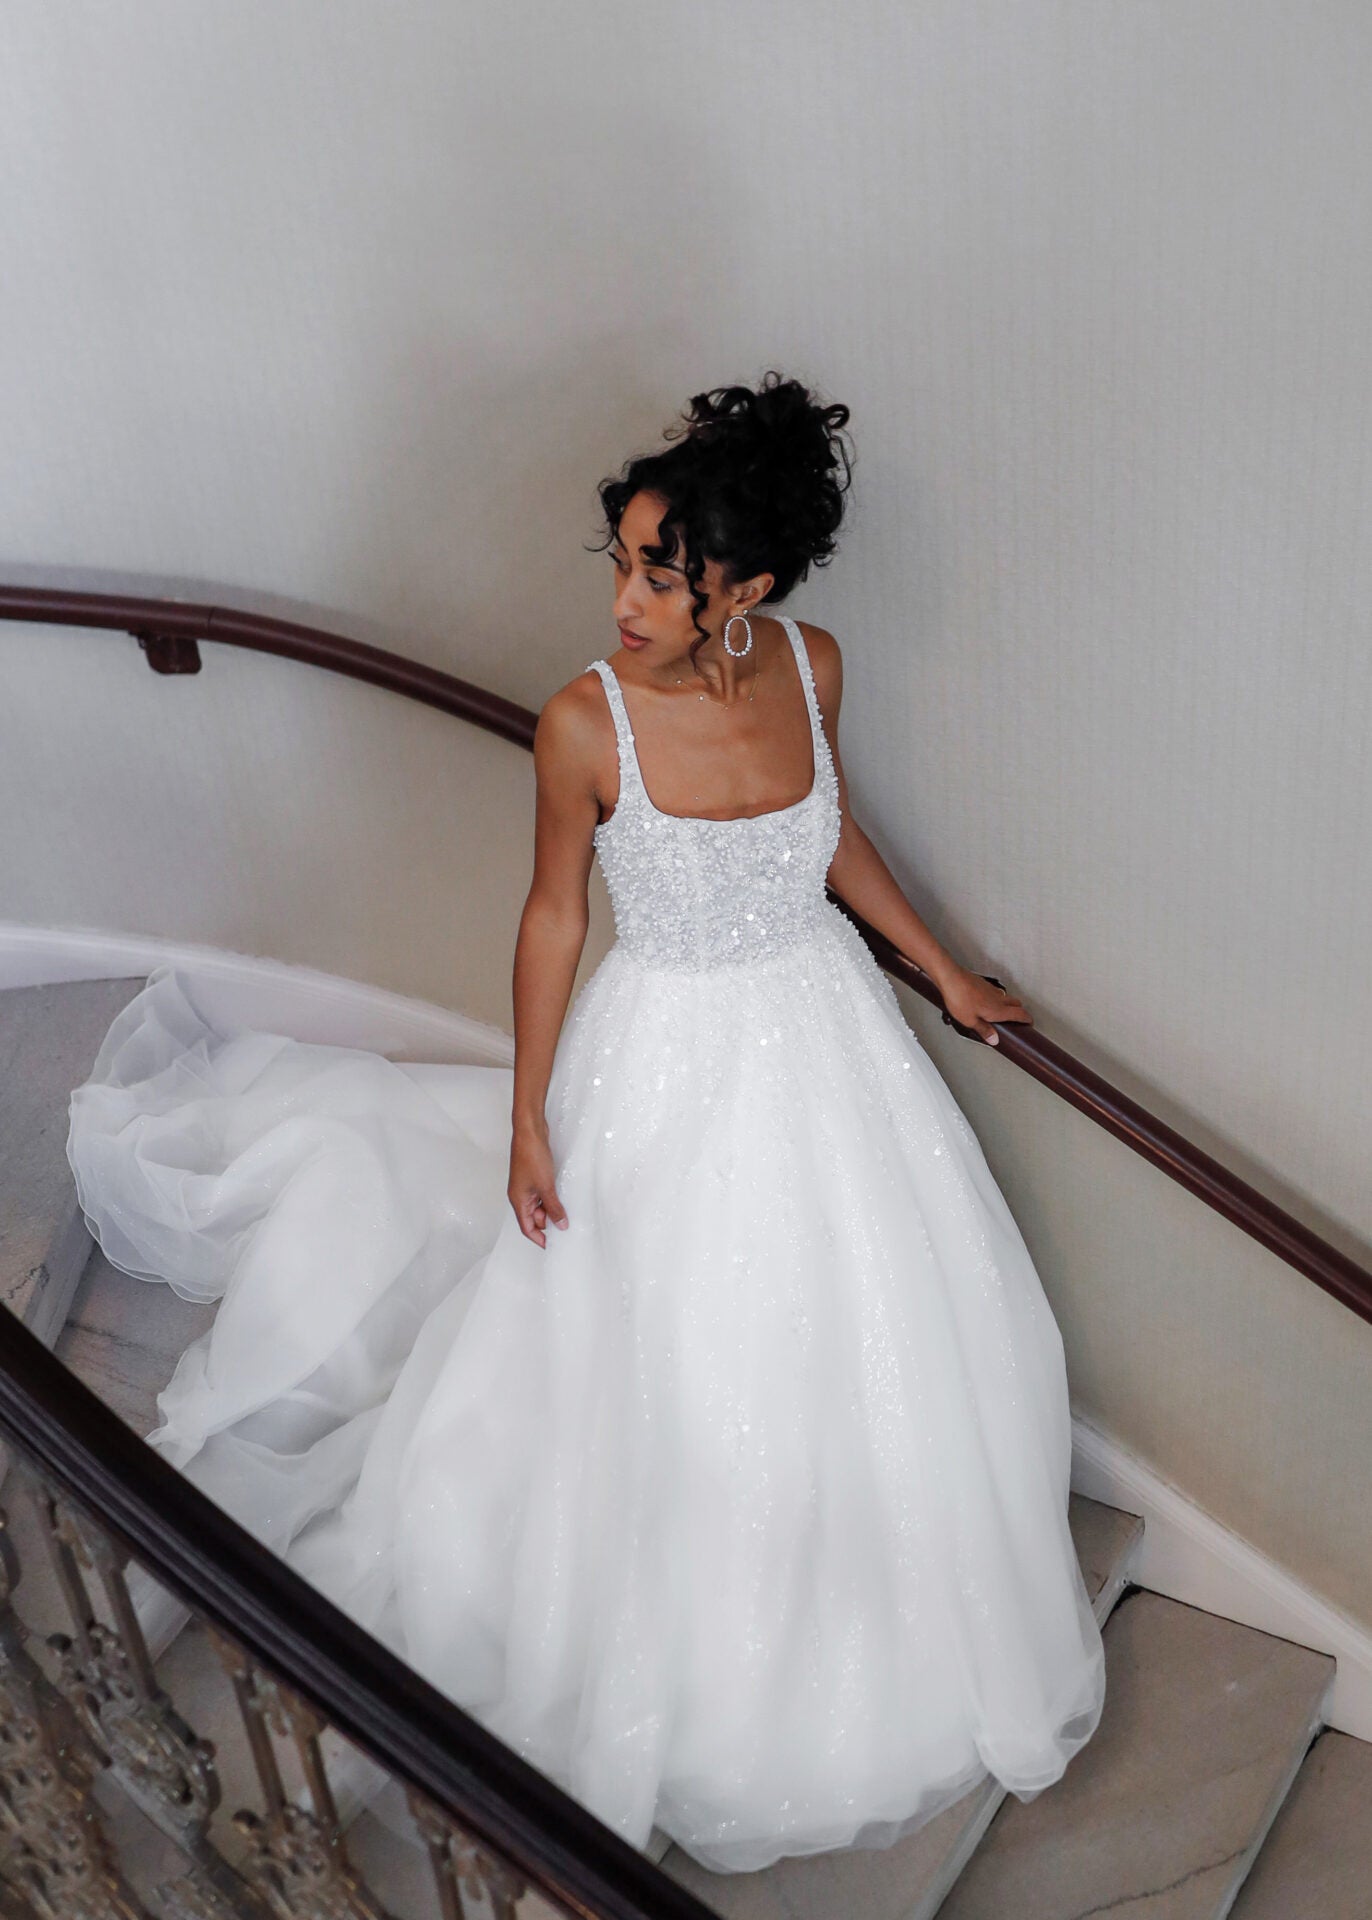 Sleeveless A-line Wedding Dress With Beaded Bodice by Essense of Australia - Image 1